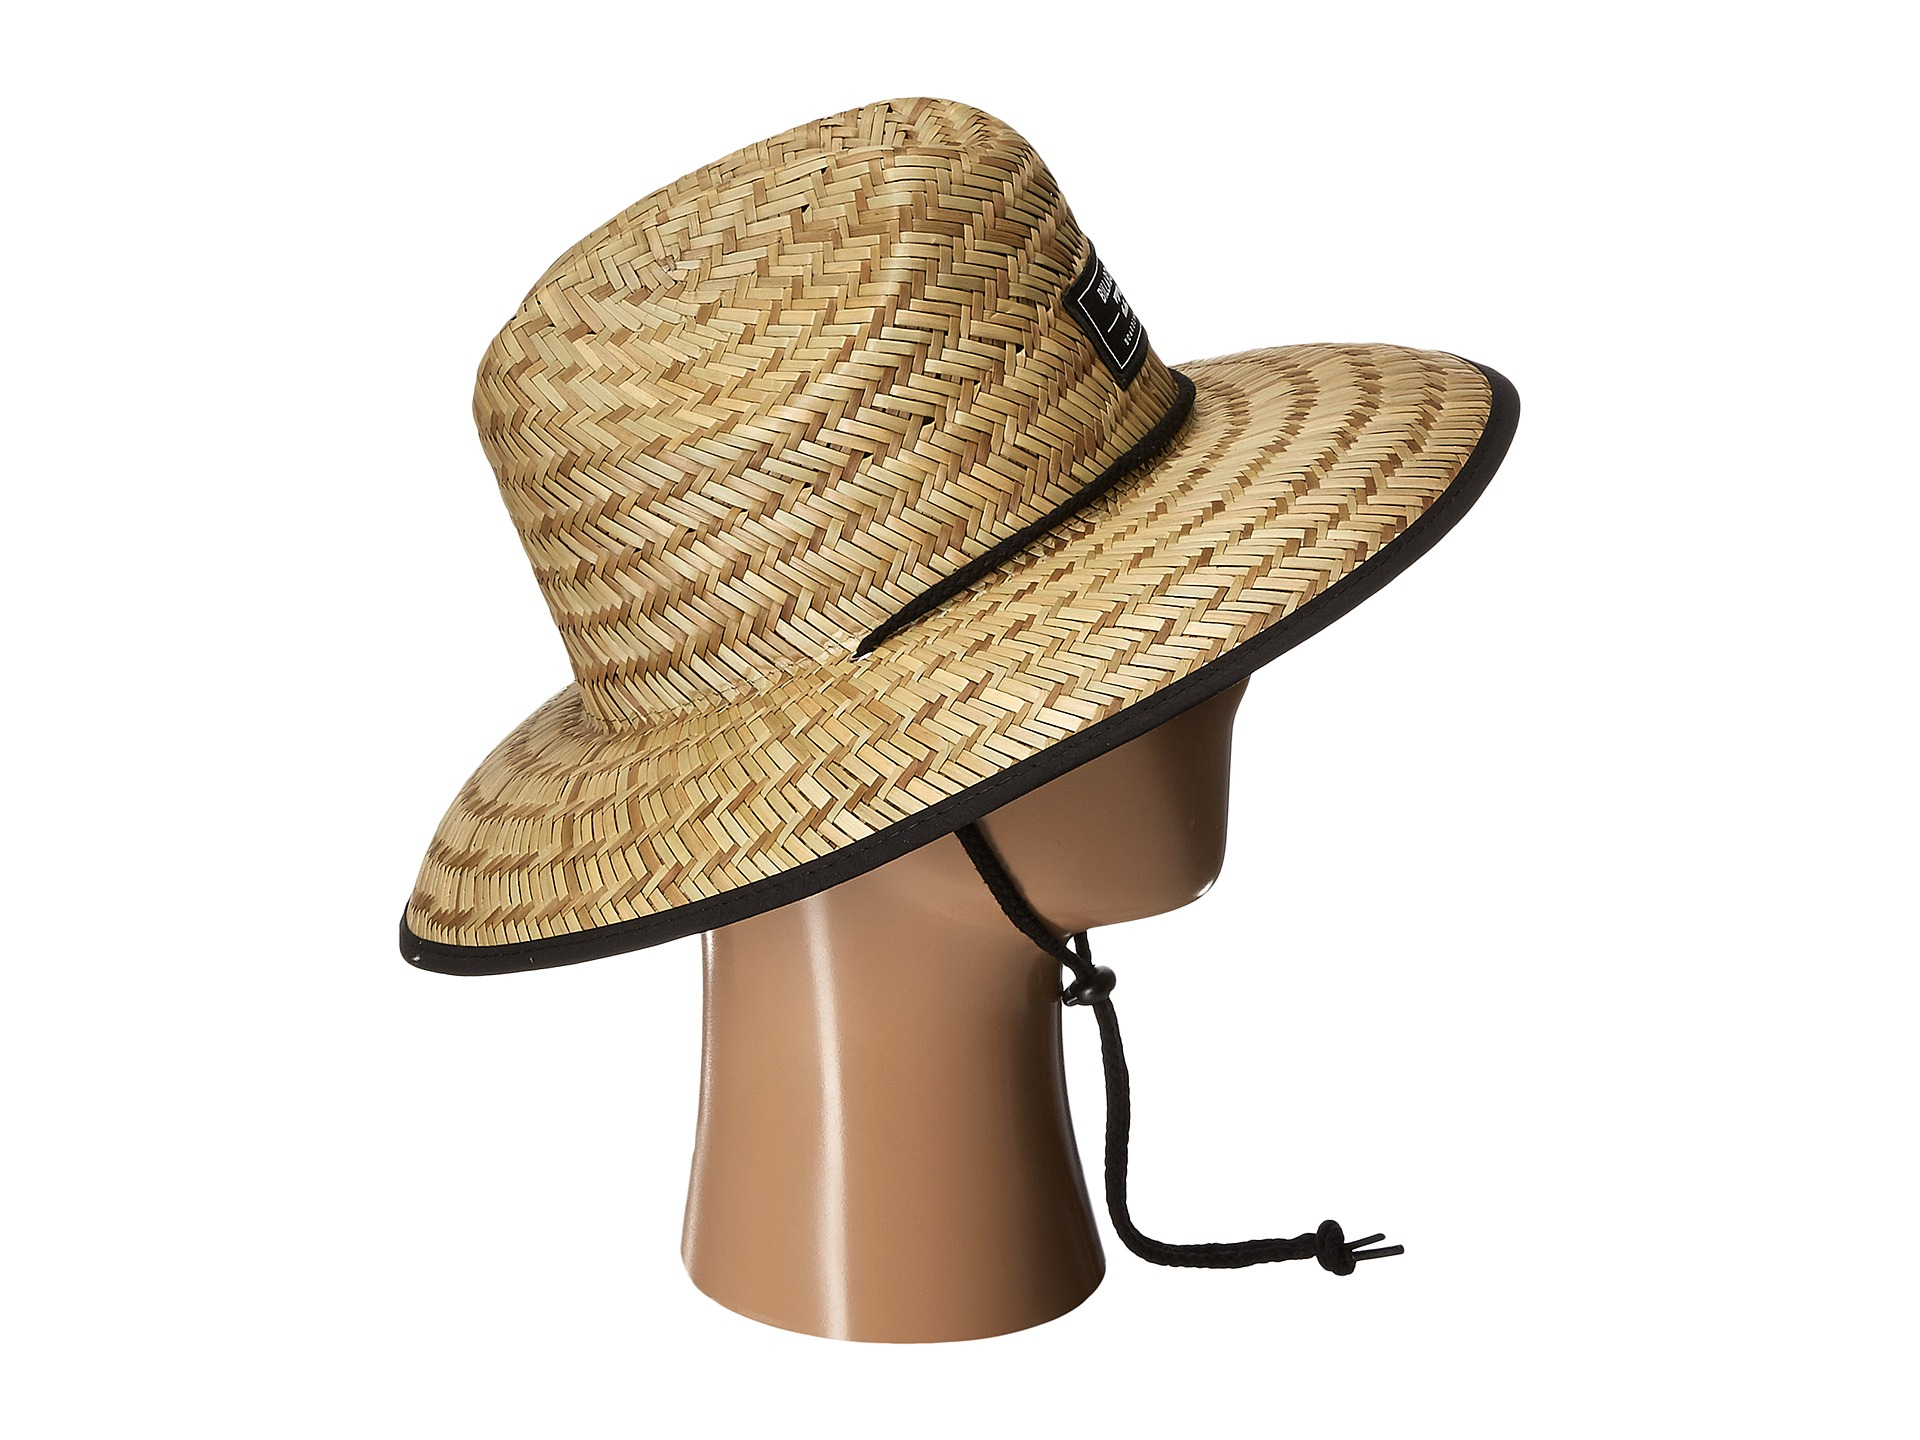 Billabong Brolock Hat in Natural for Men - Lyst